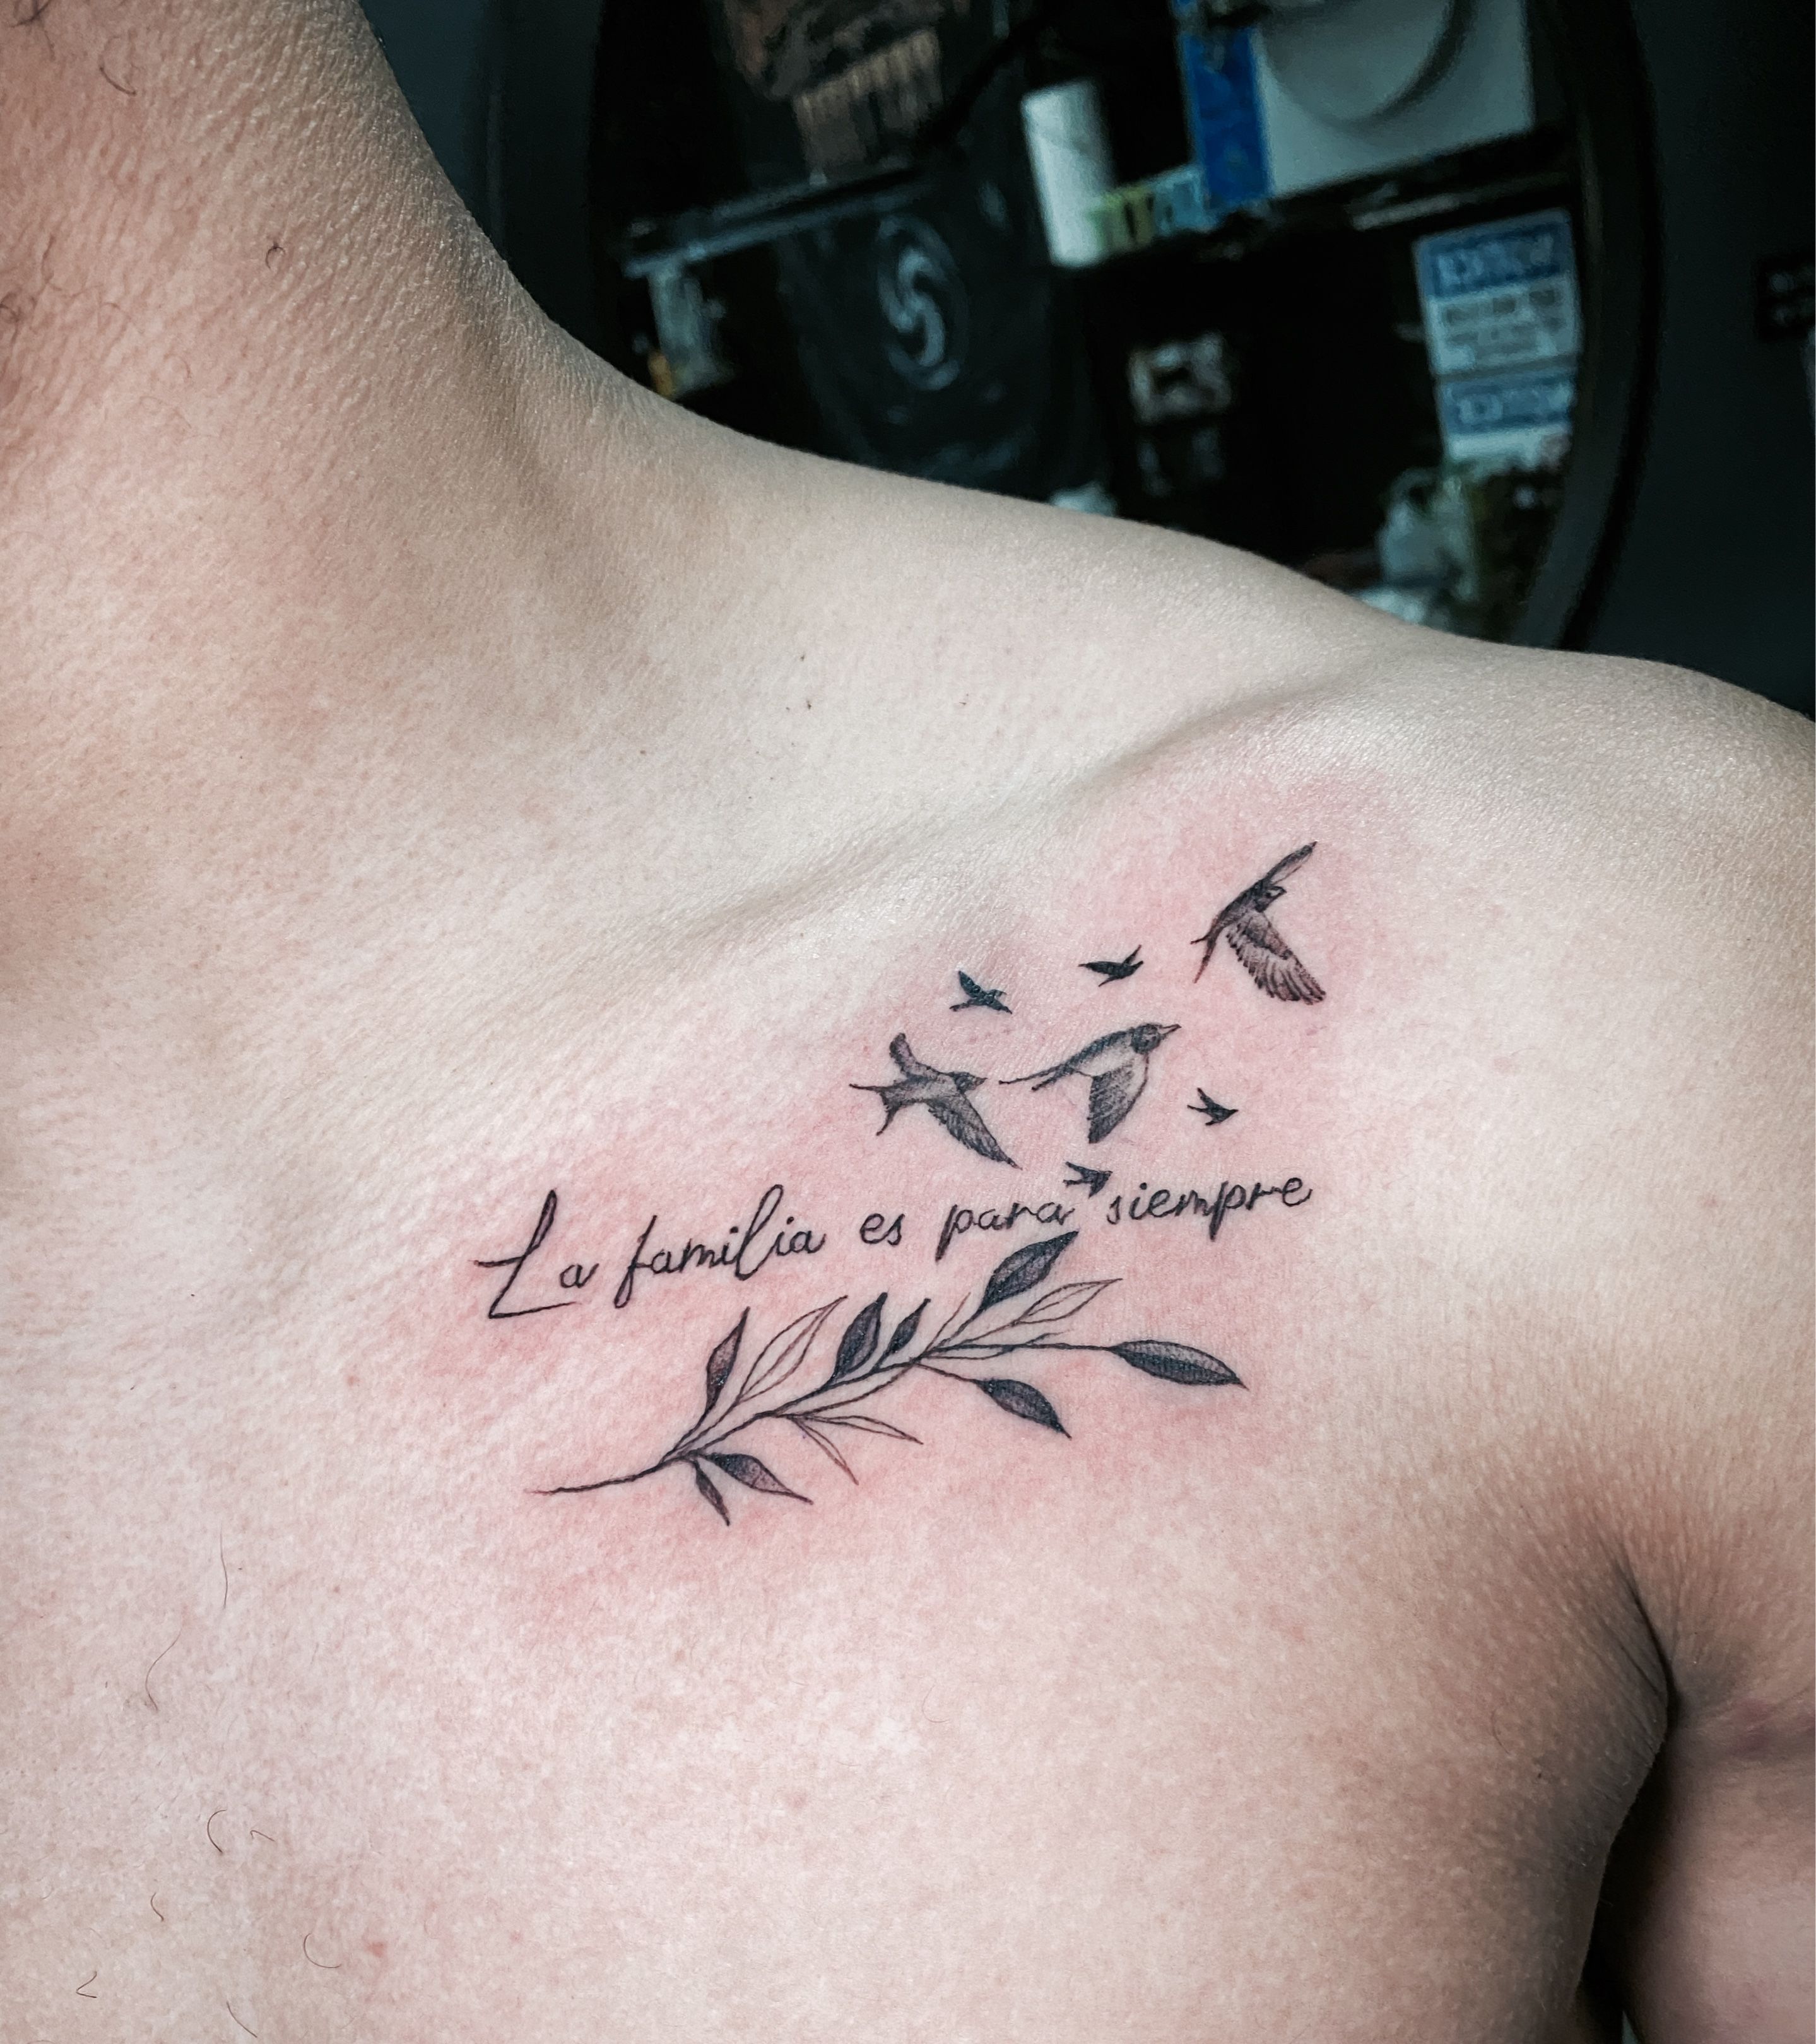 3 Small Flying Birds Temporary Tattoo (Set of 3) – Small Tattoos